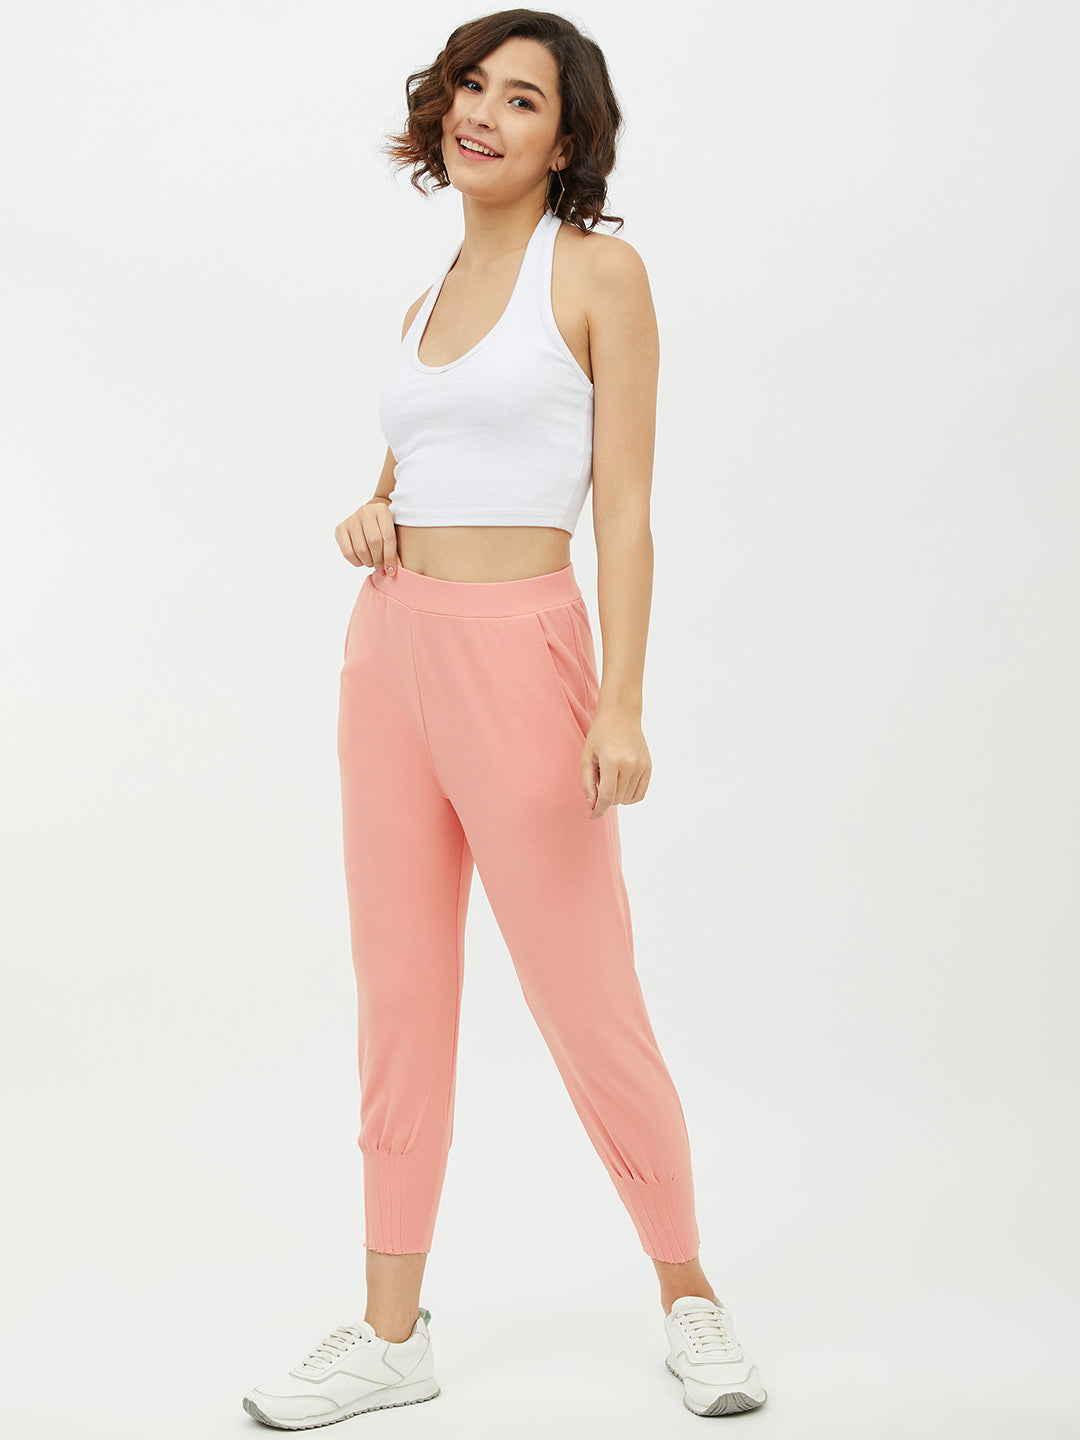 Women's Pink Jogger Style Trousers - StyleStone